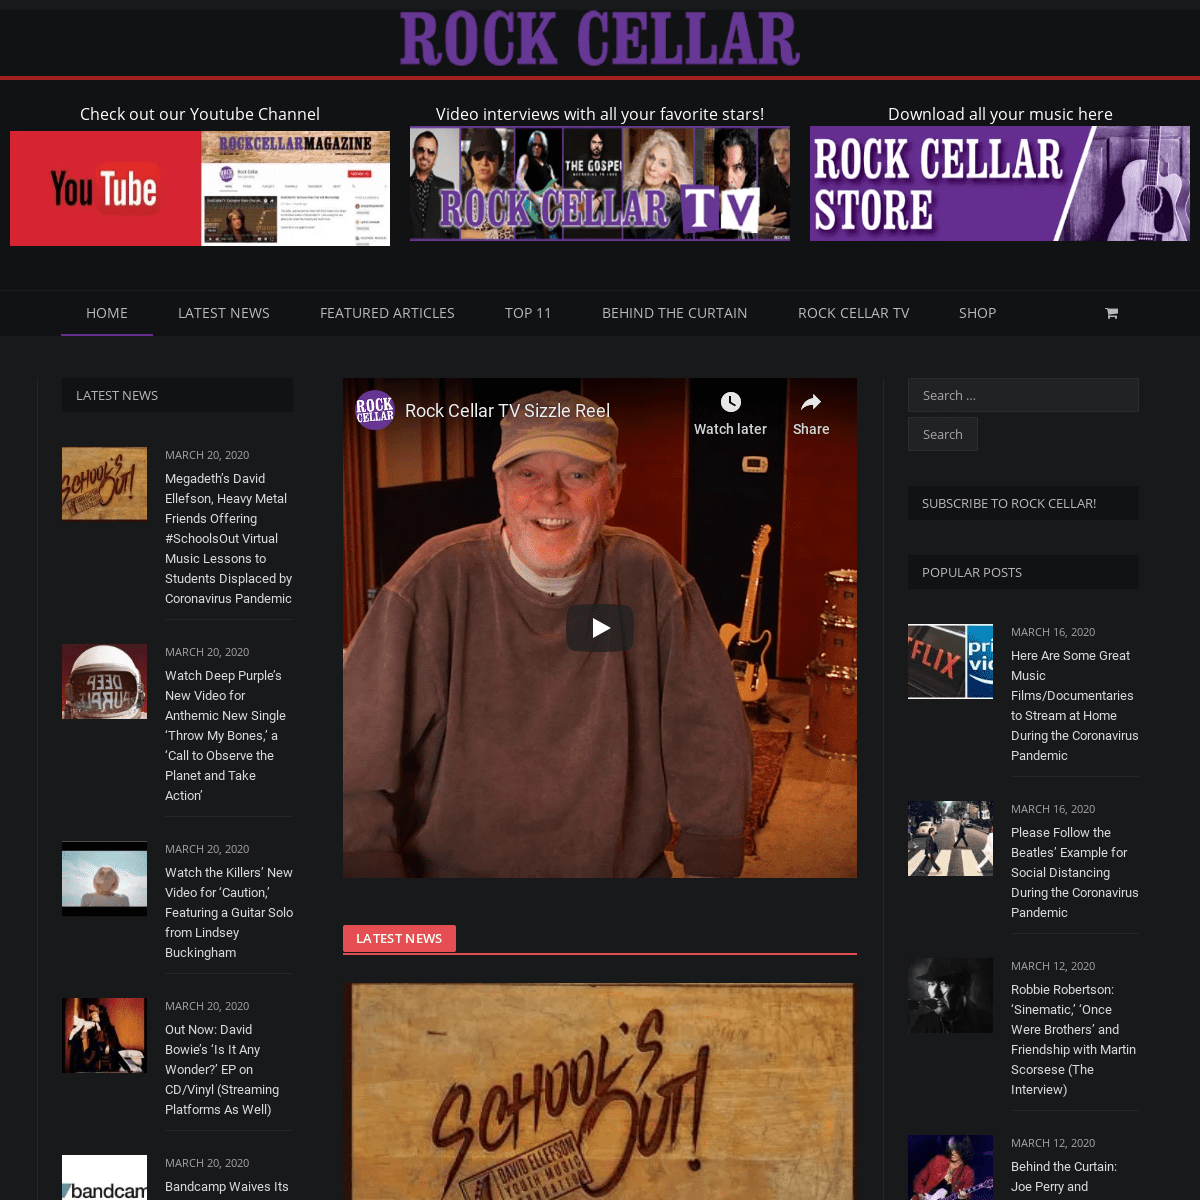 A complete backup of rockcellarmagazine.com